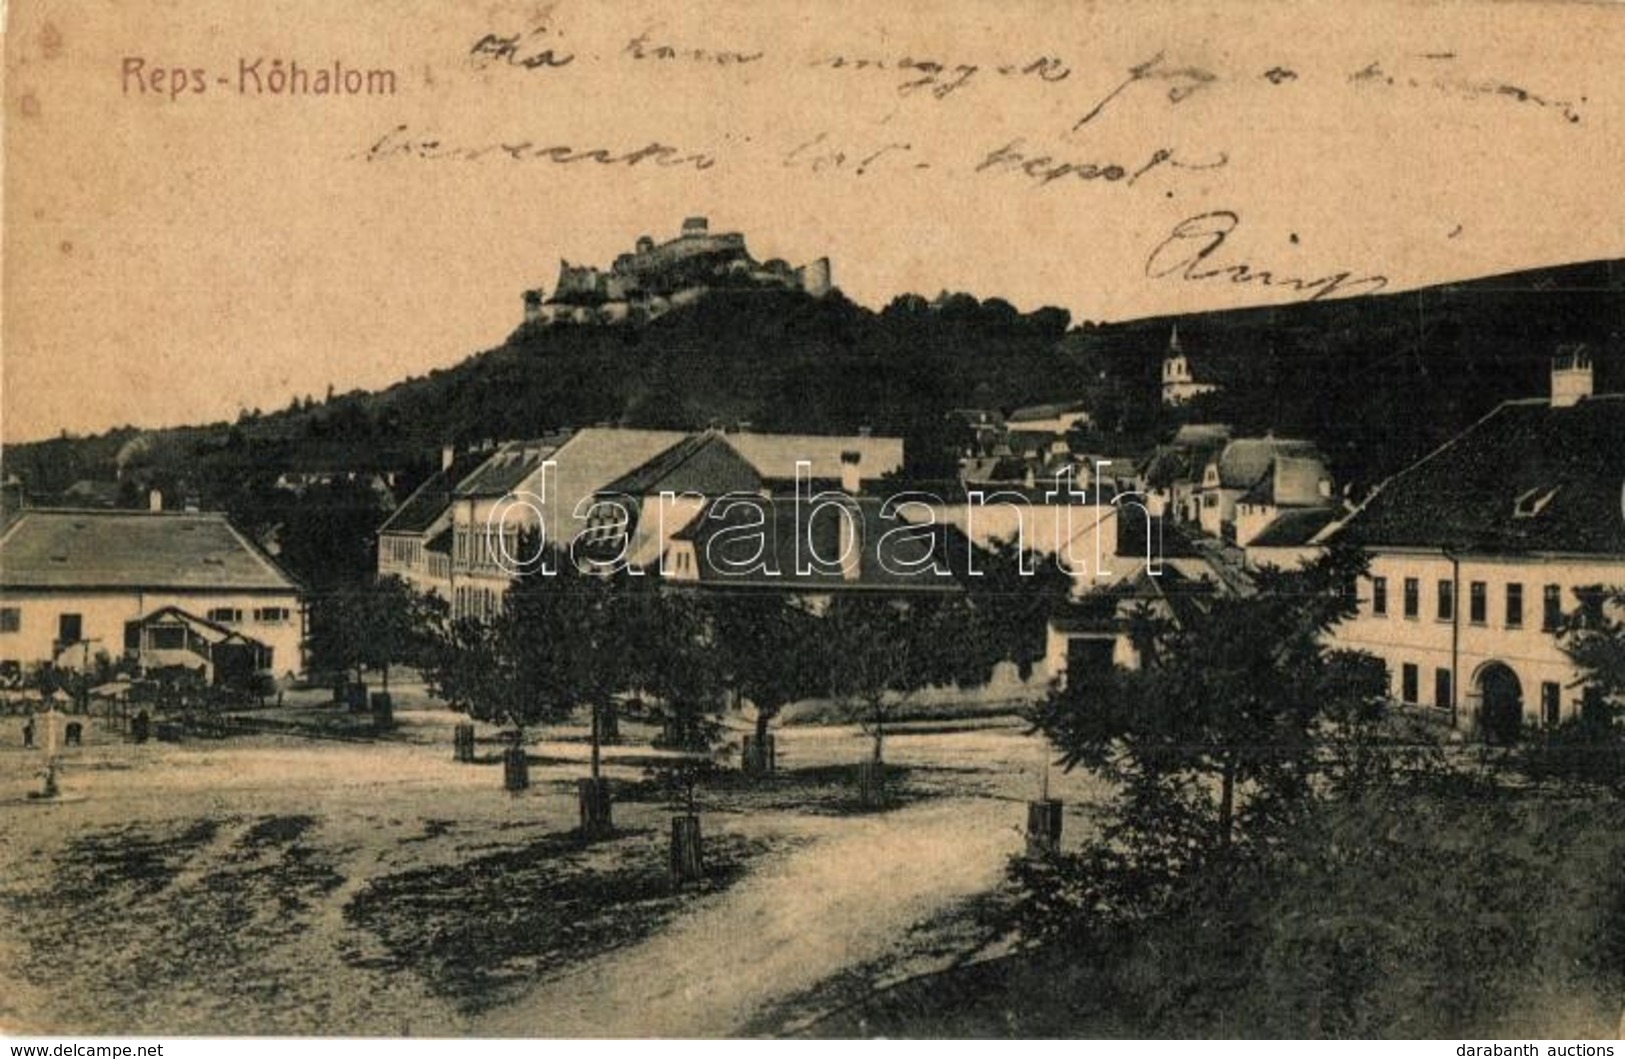 T2/T3 1909 Kőhalom, Reps, Rupea; Utcakép, Vár. W. L. (?) 1777. Kiadja Johanna Gunesch / Cetatea Rupea / Street View, Cas - Unclassified